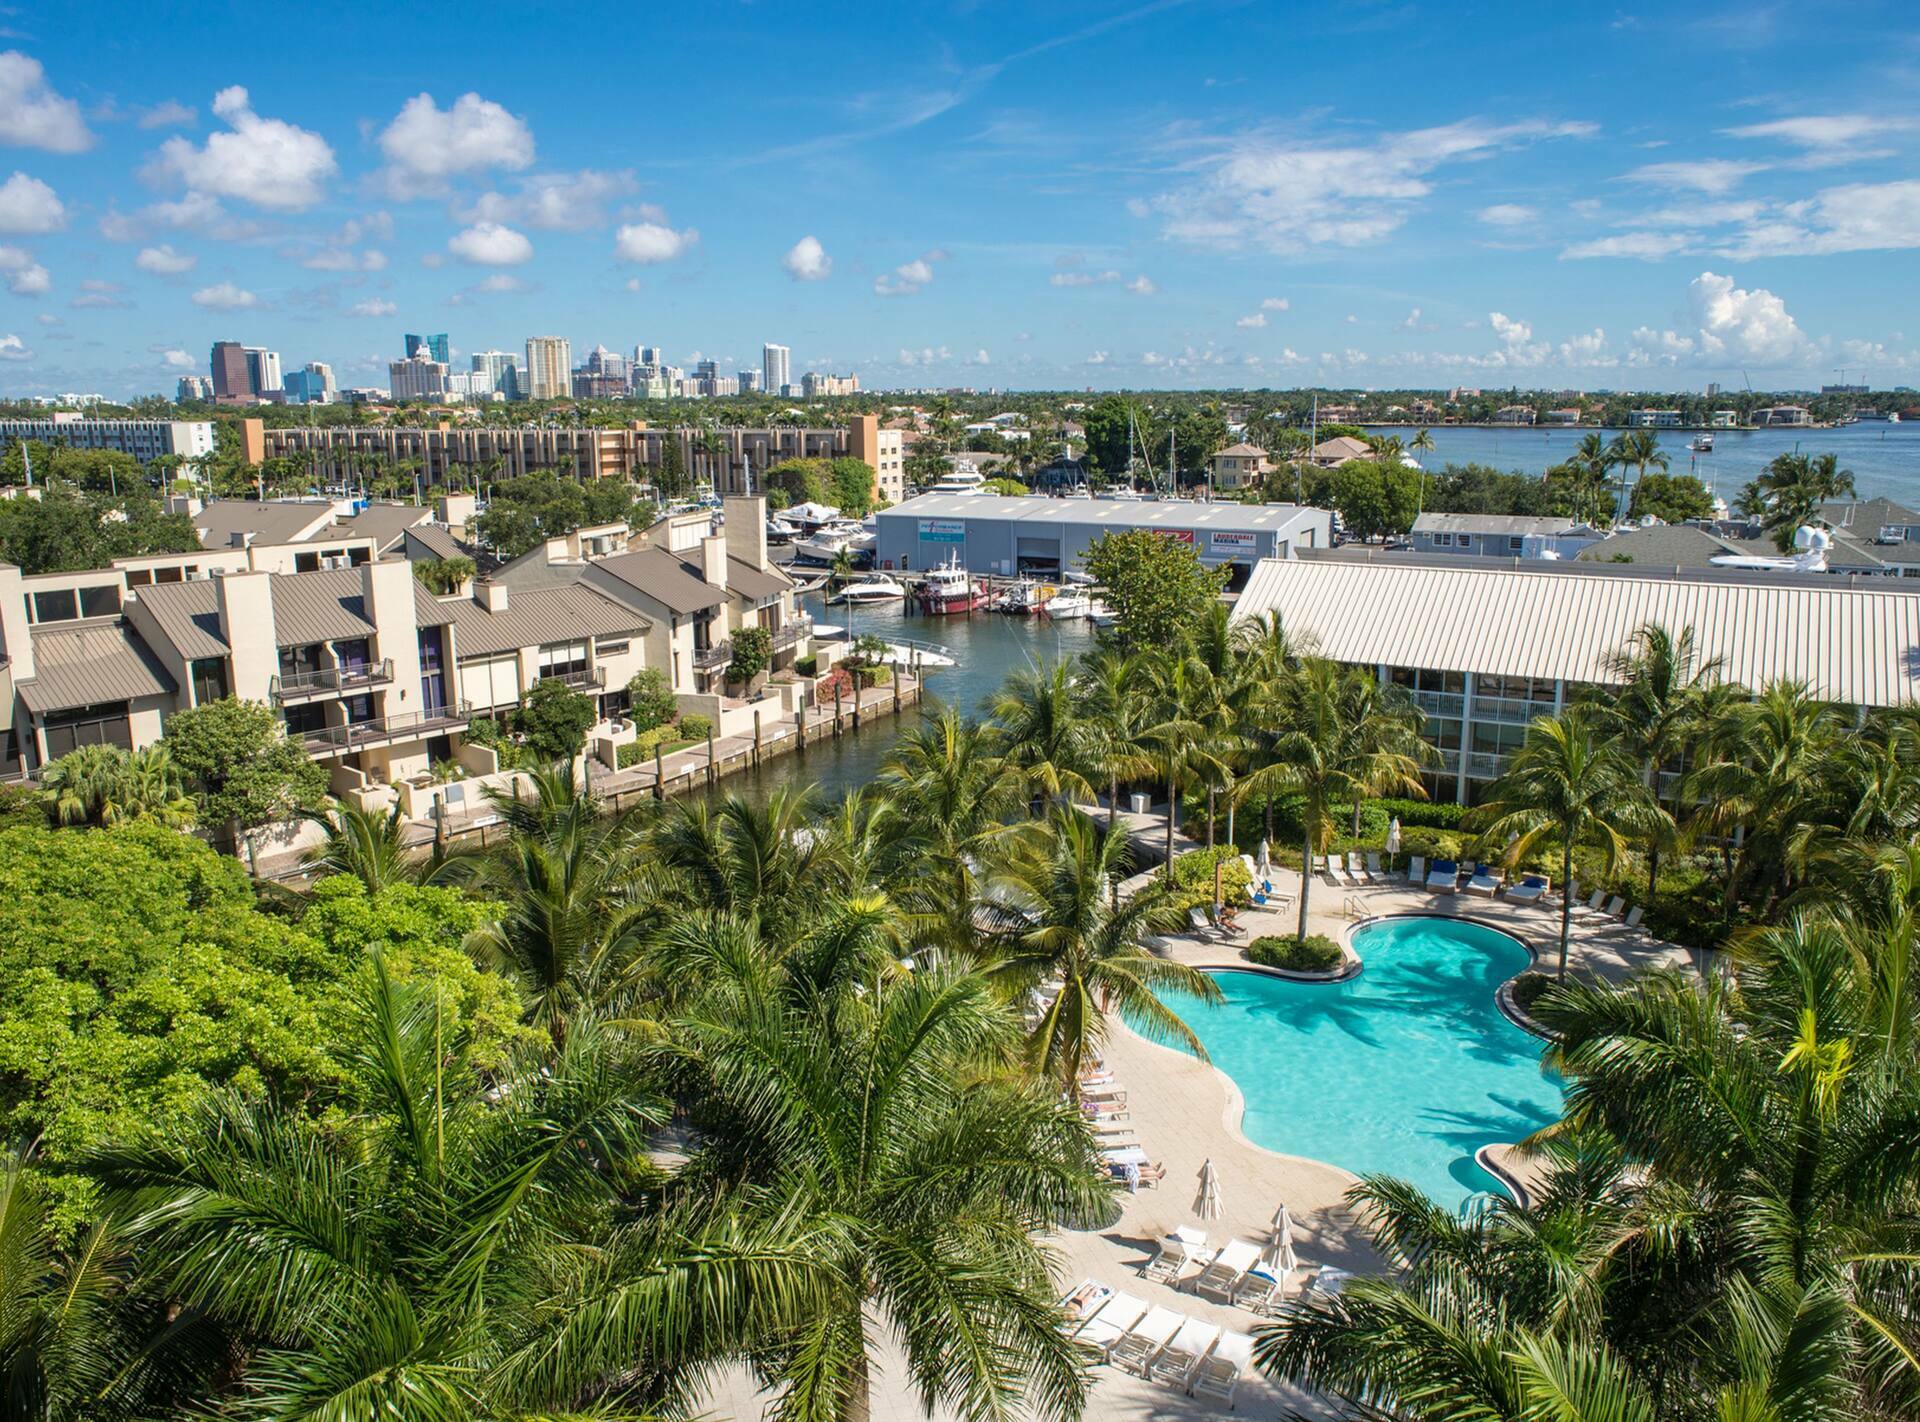 Photo of Hilton Fort Lauderdale Marina, Fort Lauderdale, FL